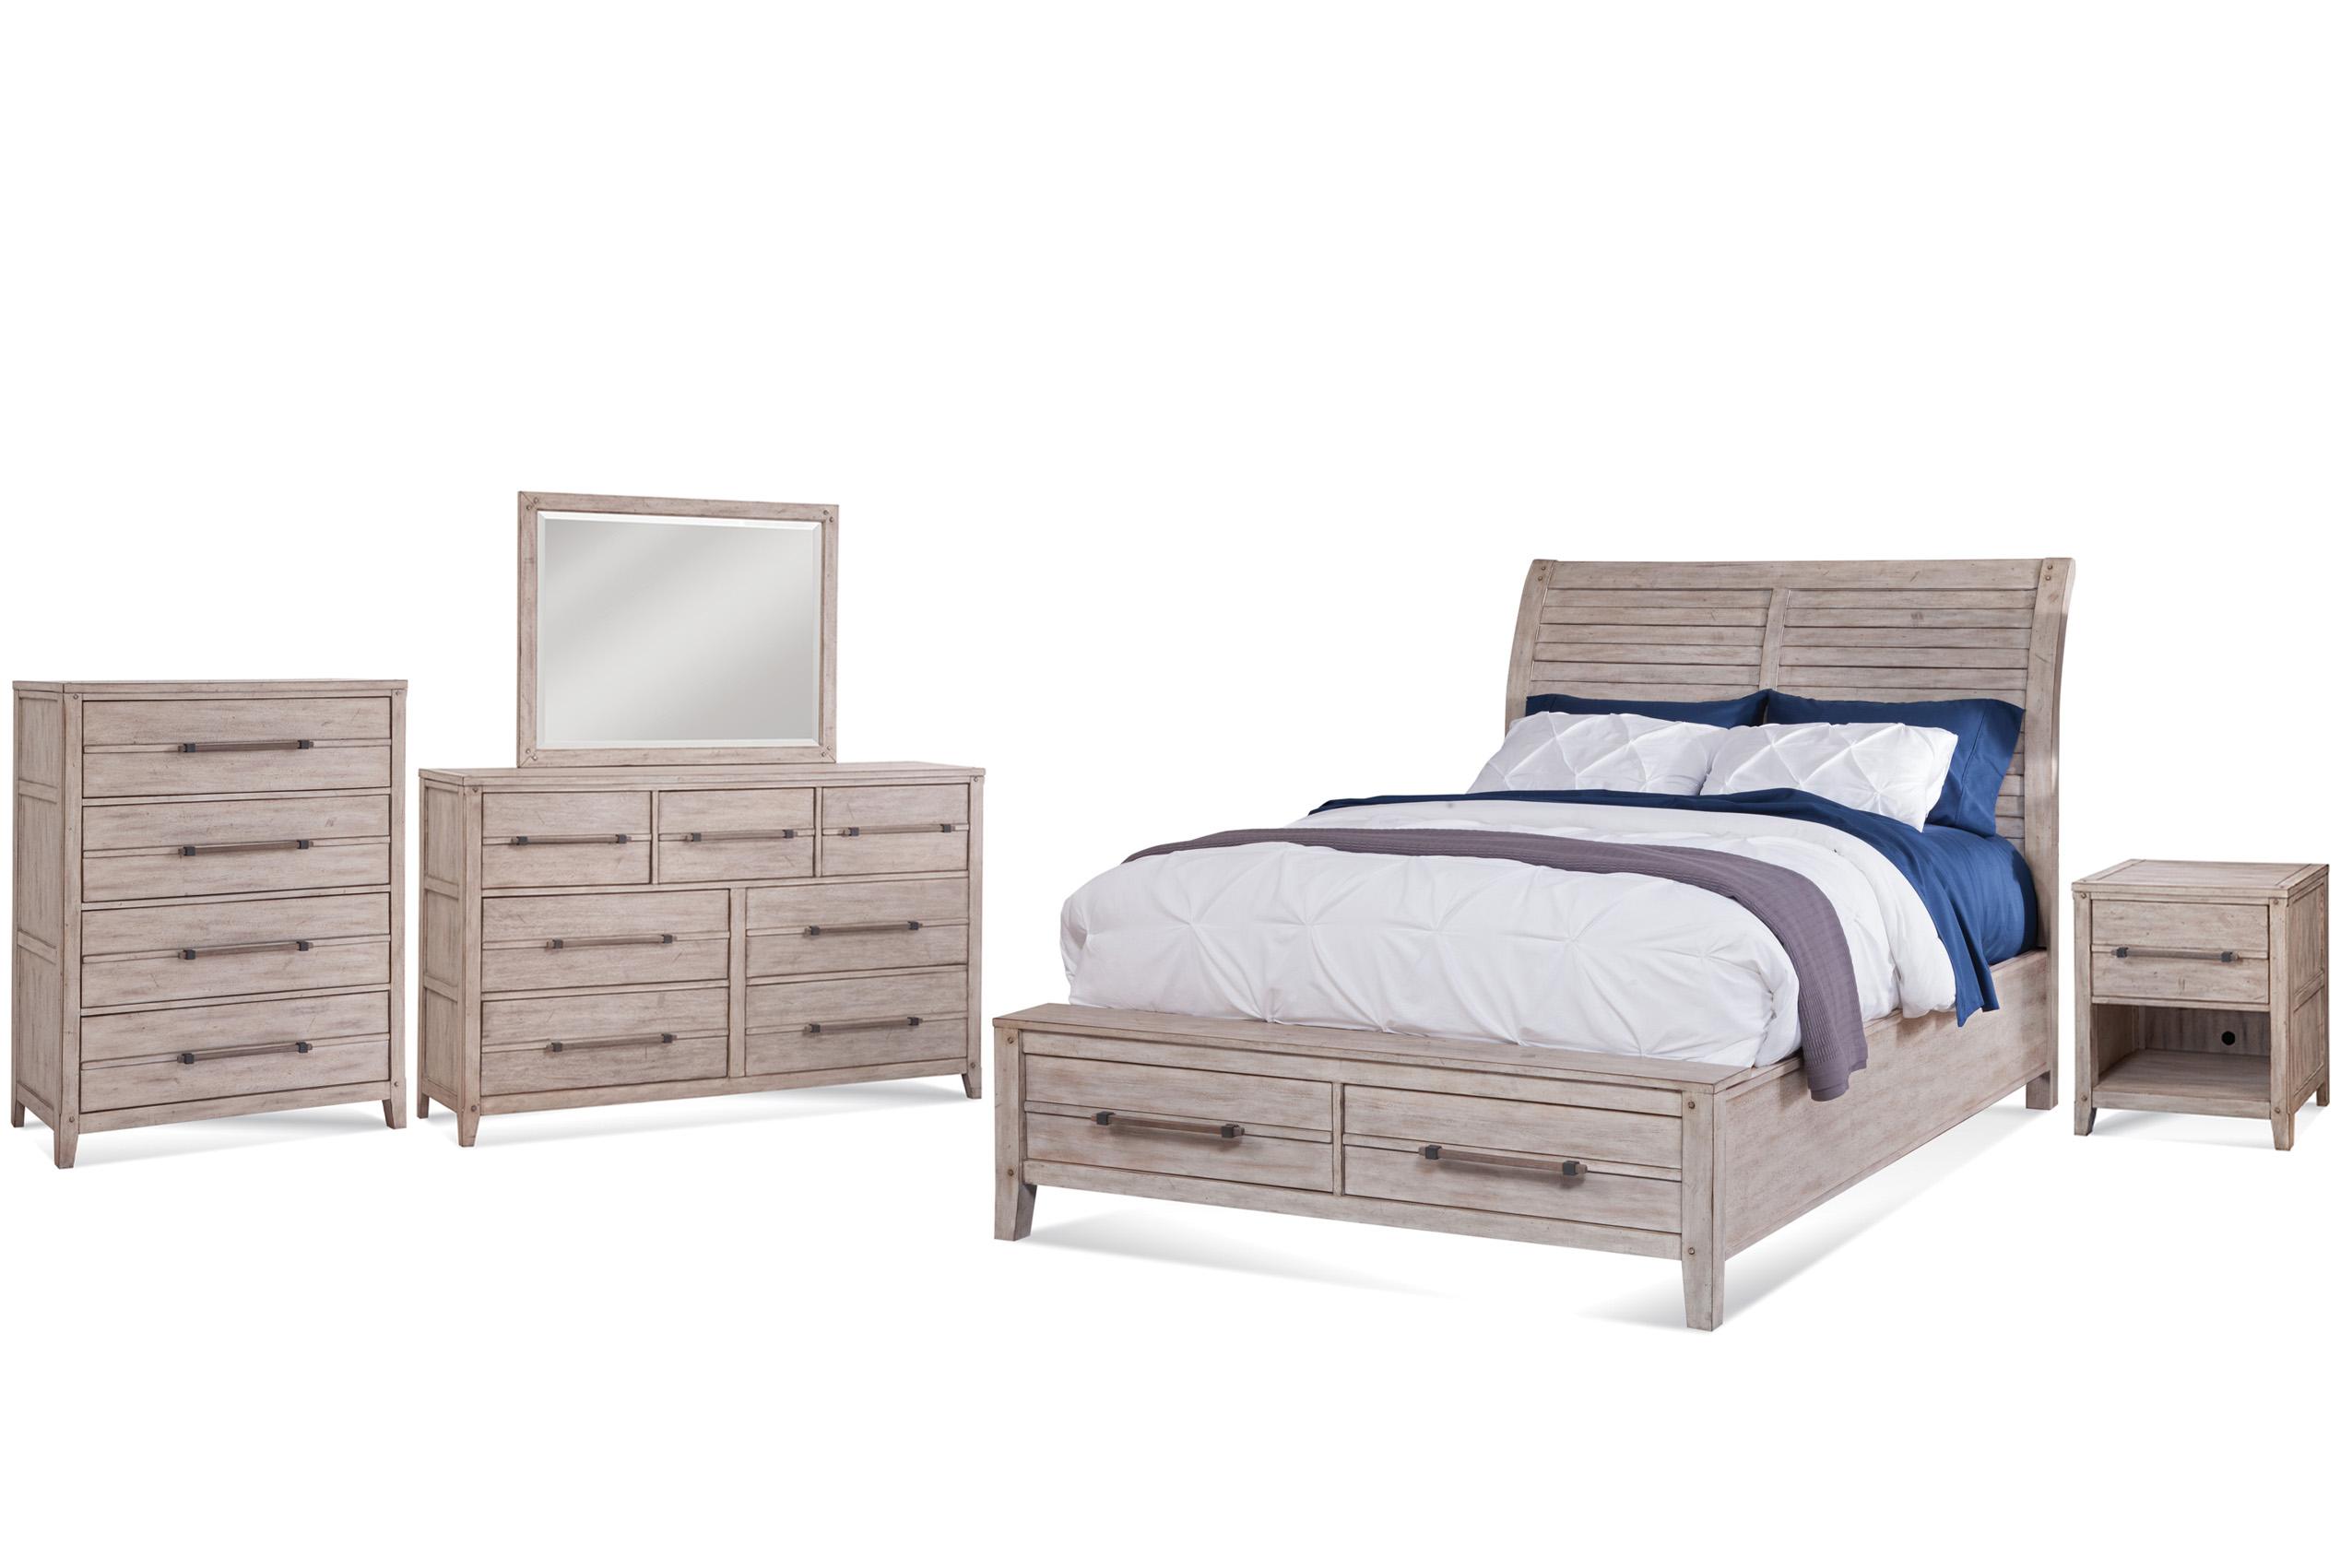 Classic, Traditional Sleigh Bedroom Set AURORA 2810-50PSB 2810-QSLST-5PC in whitewash 